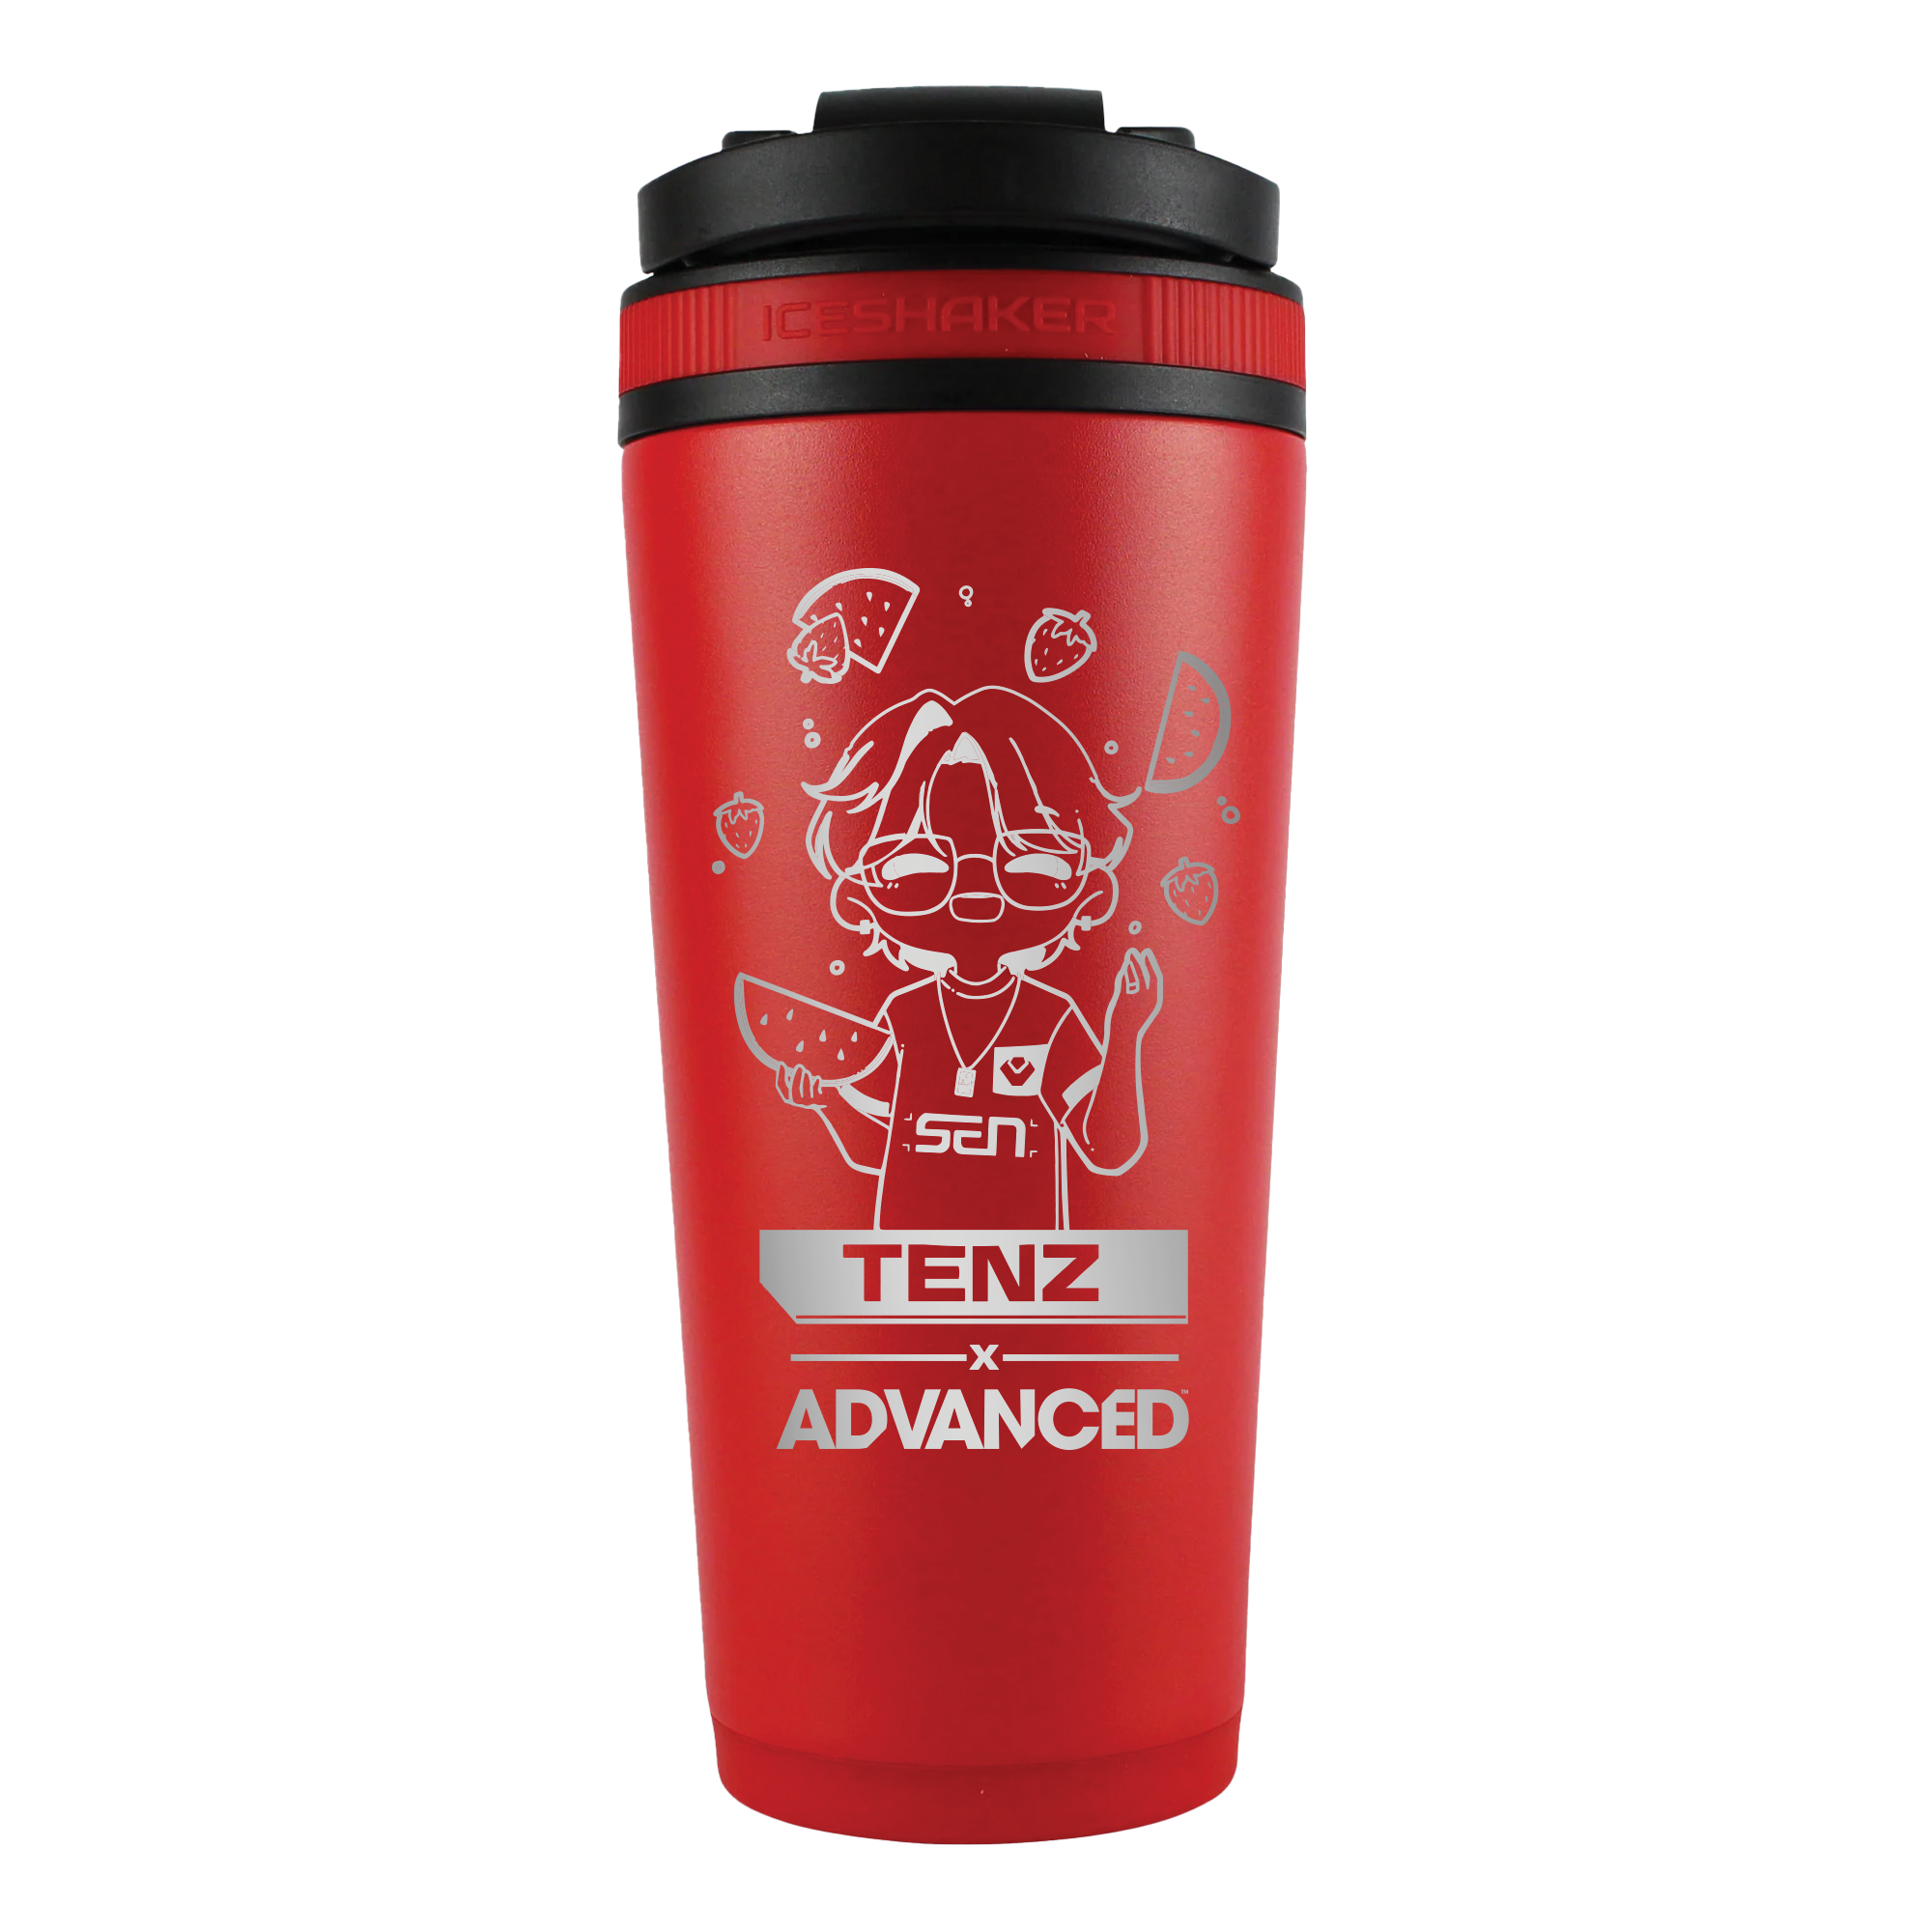 TenZ Chibi ADVANCED Ice Shaker - Red